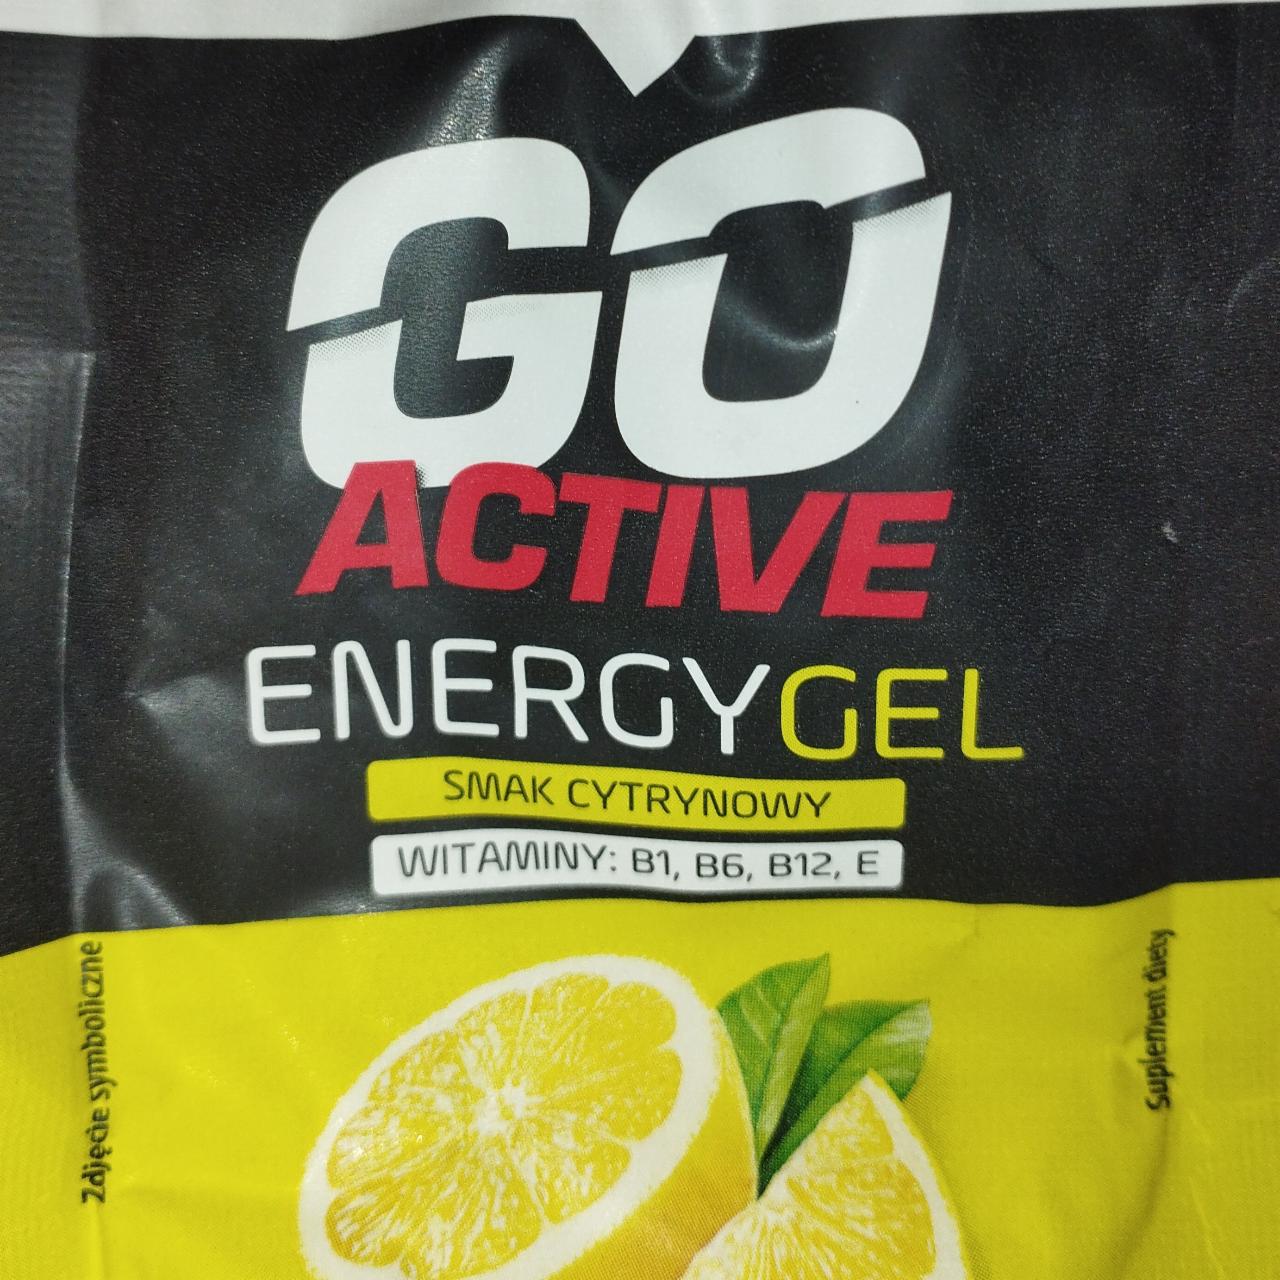 Zdjęcia - Energy Gel smak cytrynowy Go Active